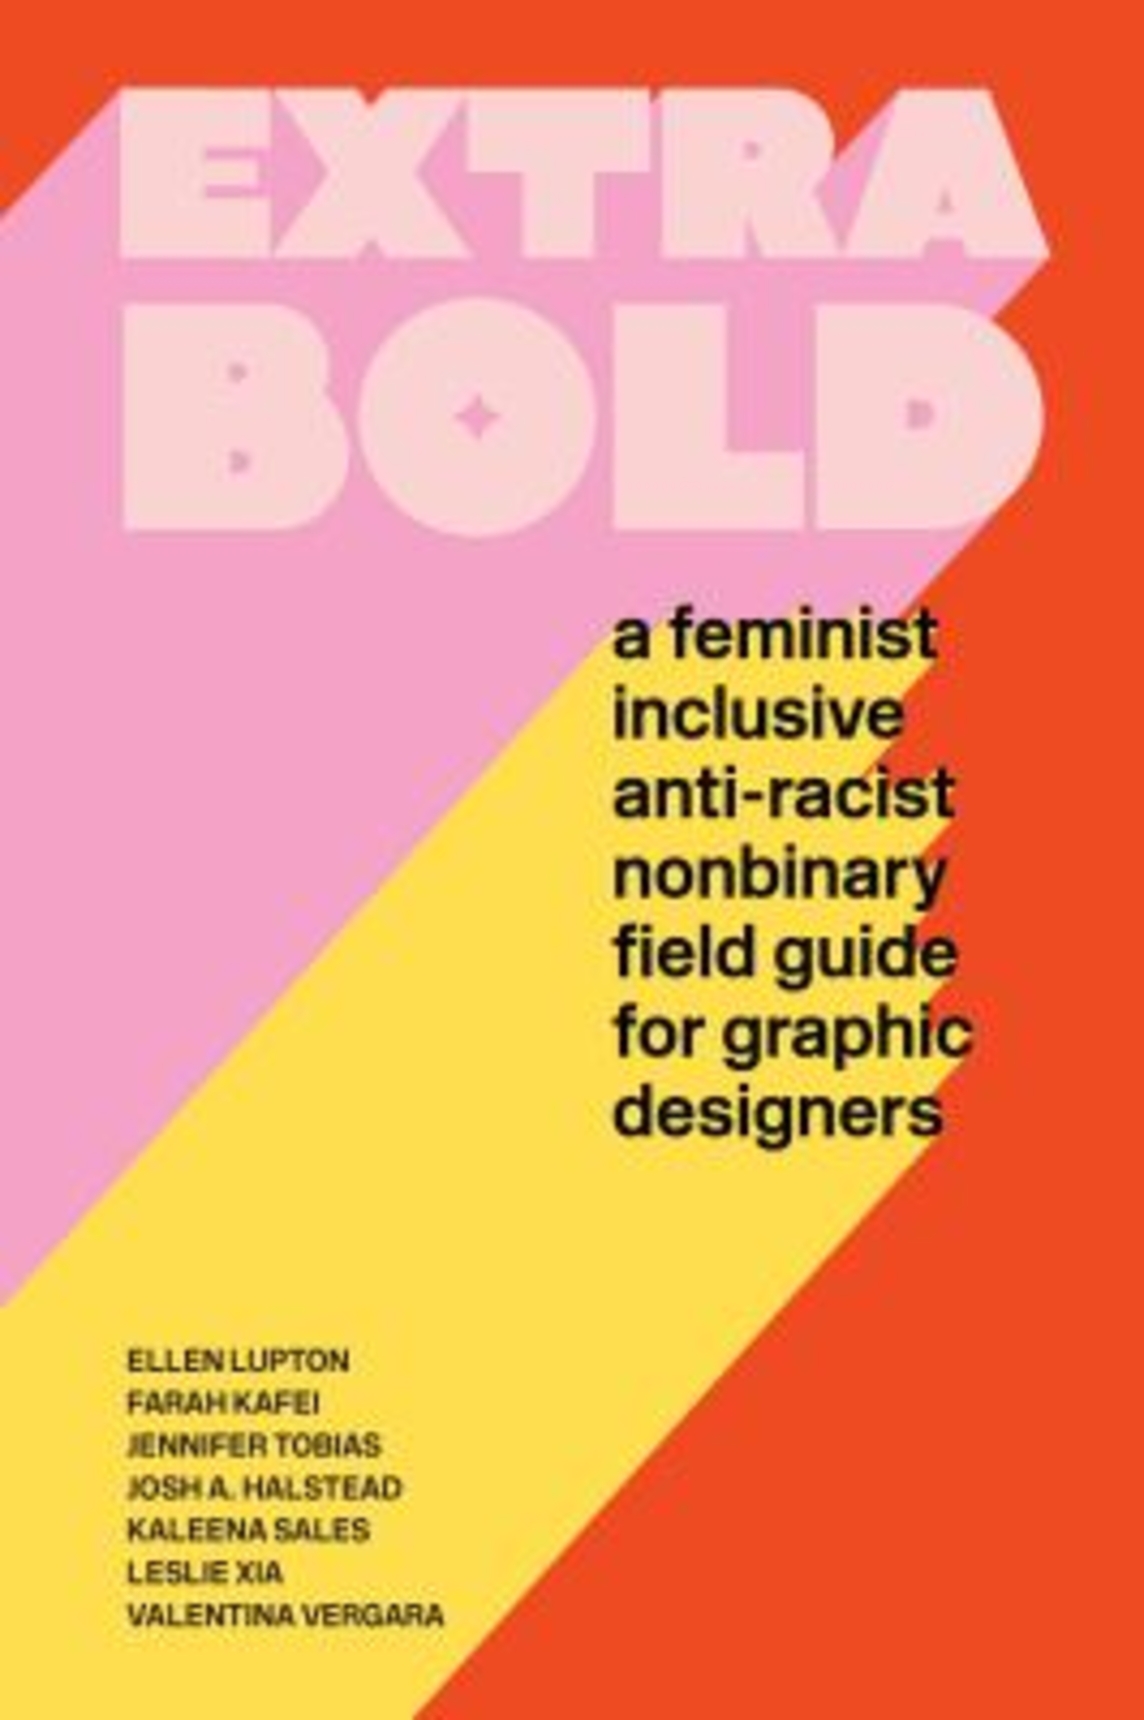 Book Cover Image: Extra bold : a feminist inclusive anti-racist non-binary field guide for graphic designers 